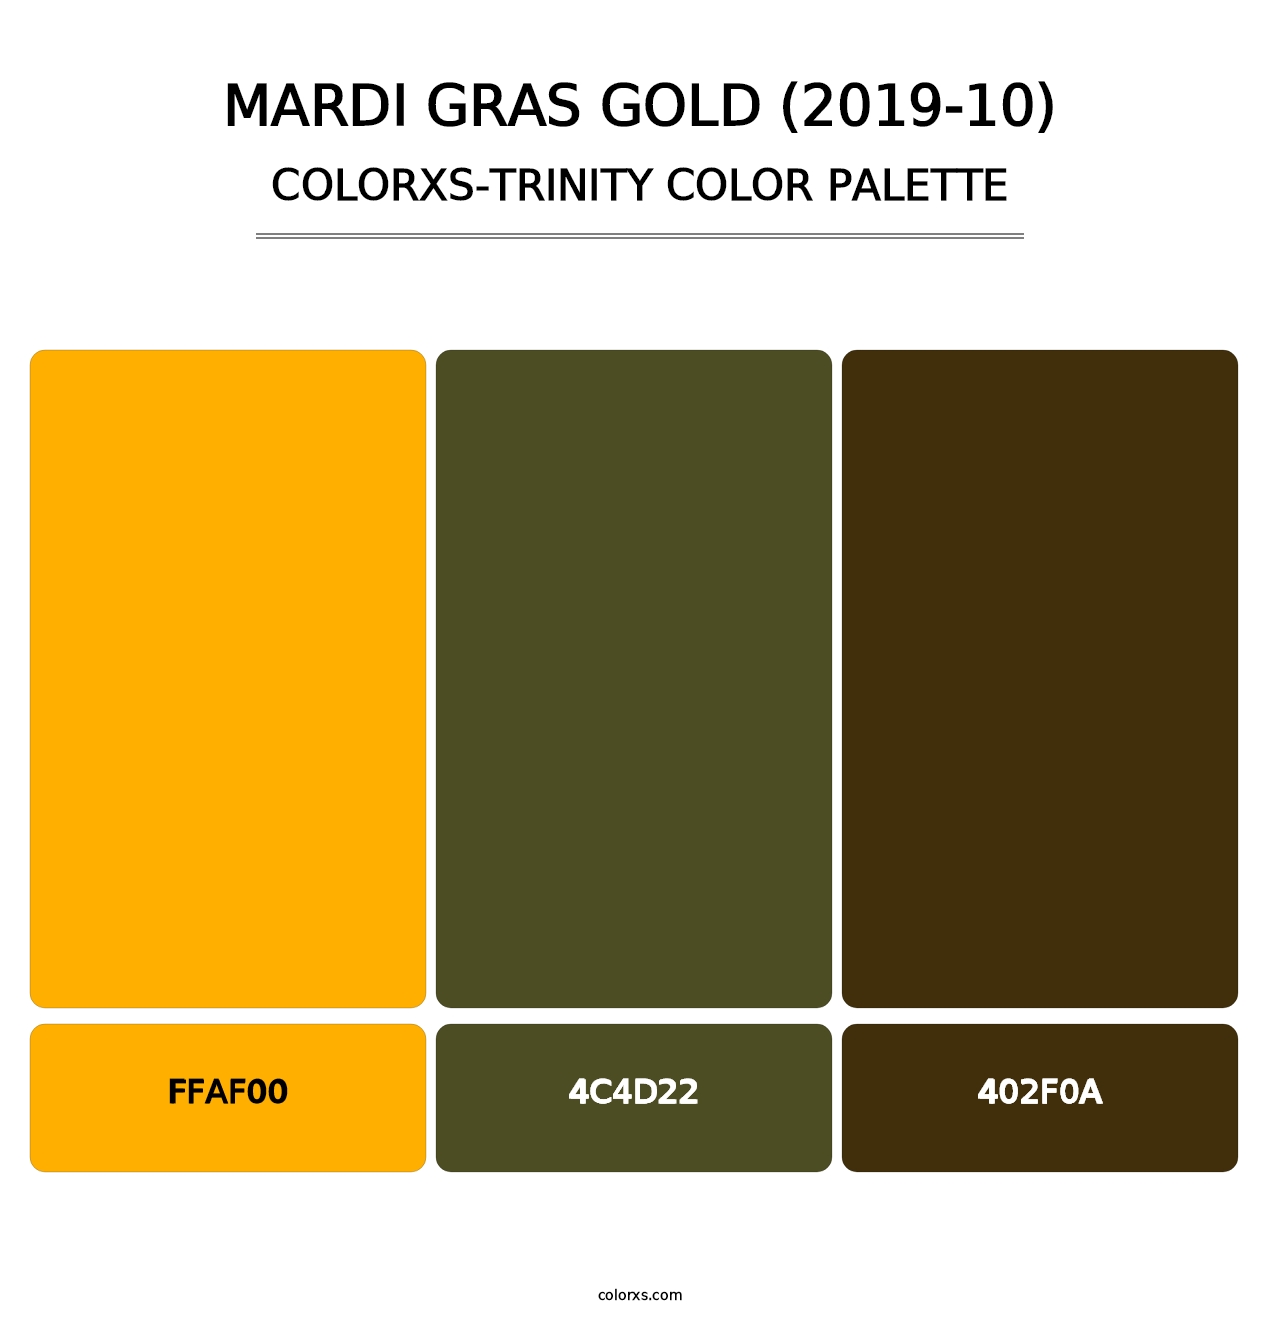 Mardi Gras Gold (2019-10) - Colorxs Trinity Palette